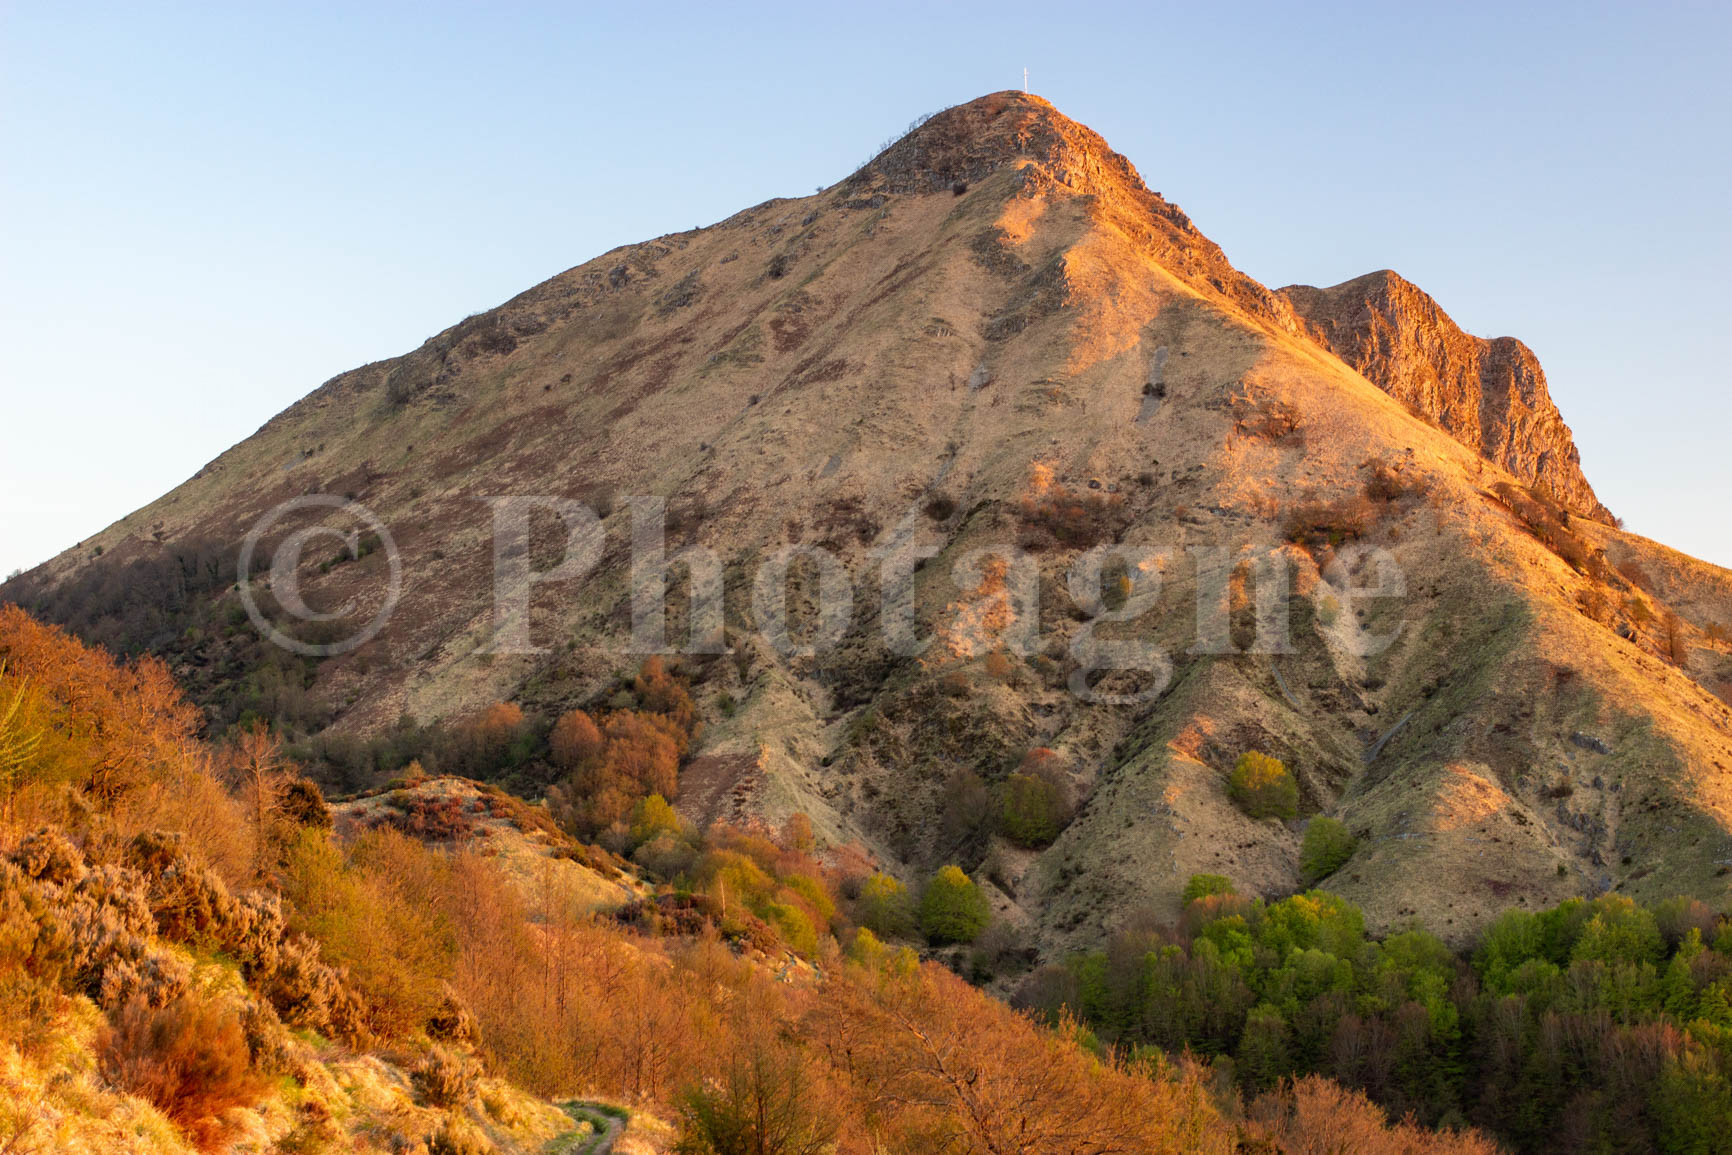 Monte Prana at sunset